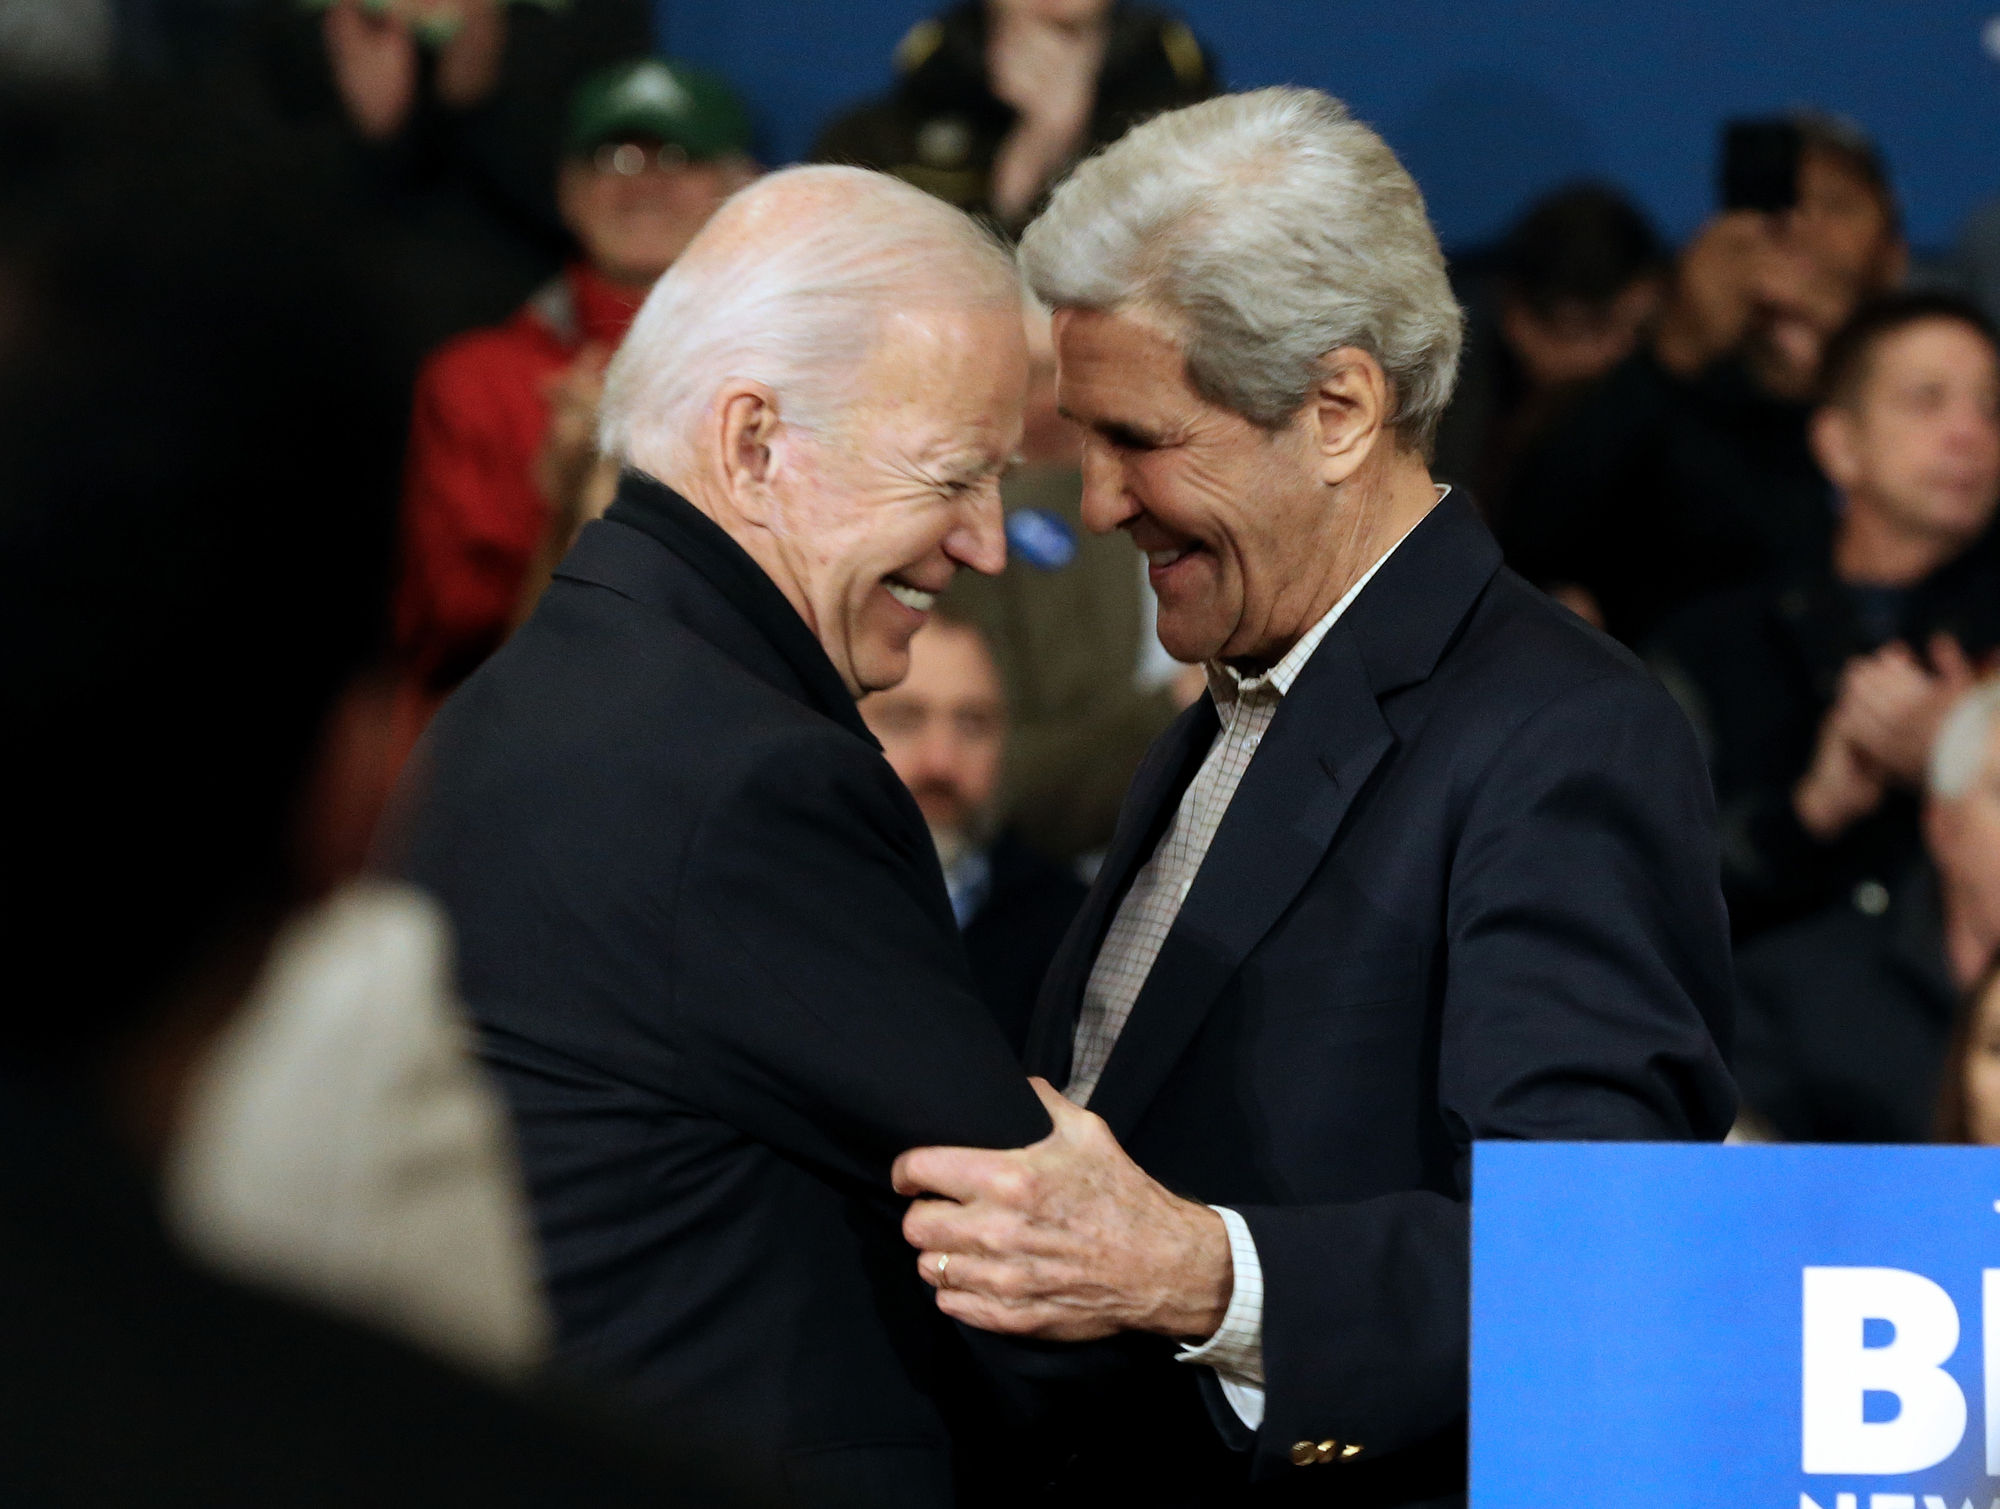 Joe Biden picks John Kerry, who signed the landmark Paris Agreement, as his climate envoy